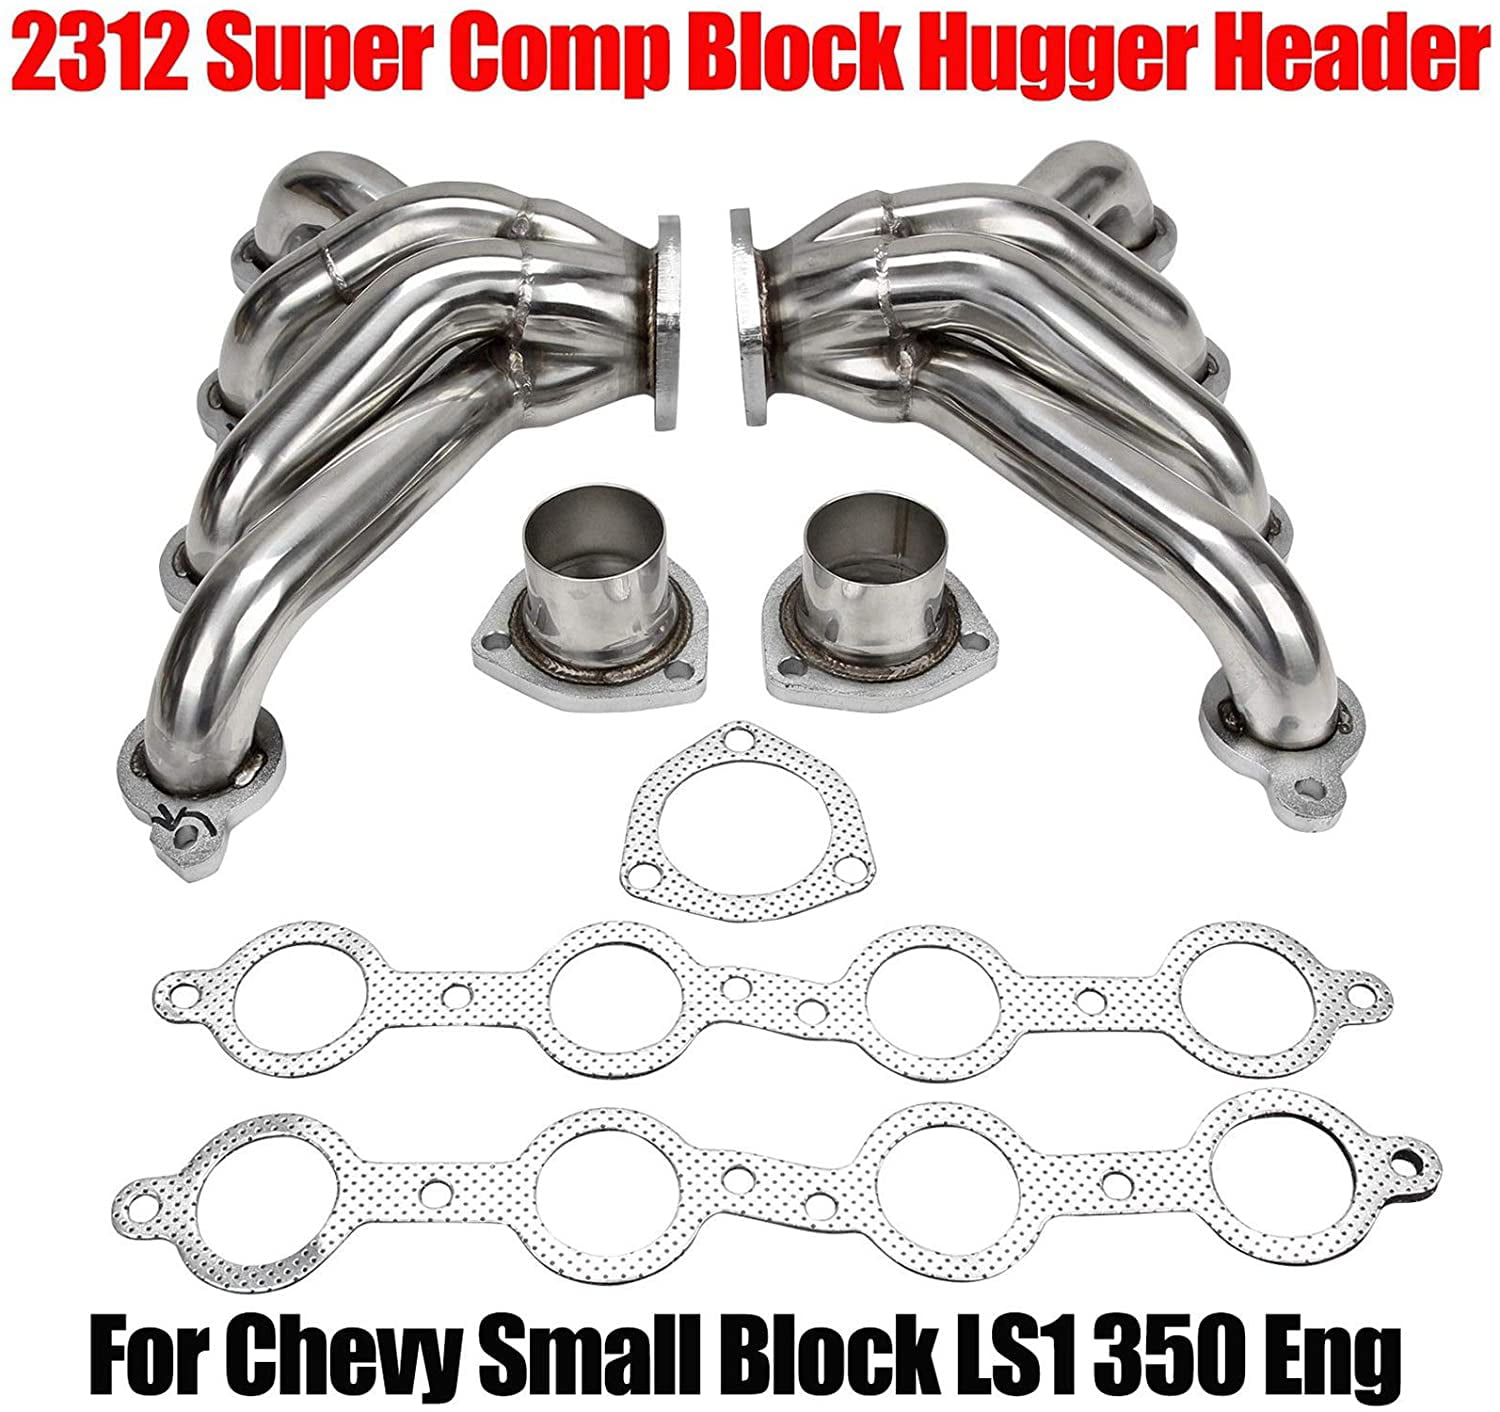 Fit For Chevy LS1 350 Eng EXHAUST Headers 2312 Super Comp Block Hugger Header